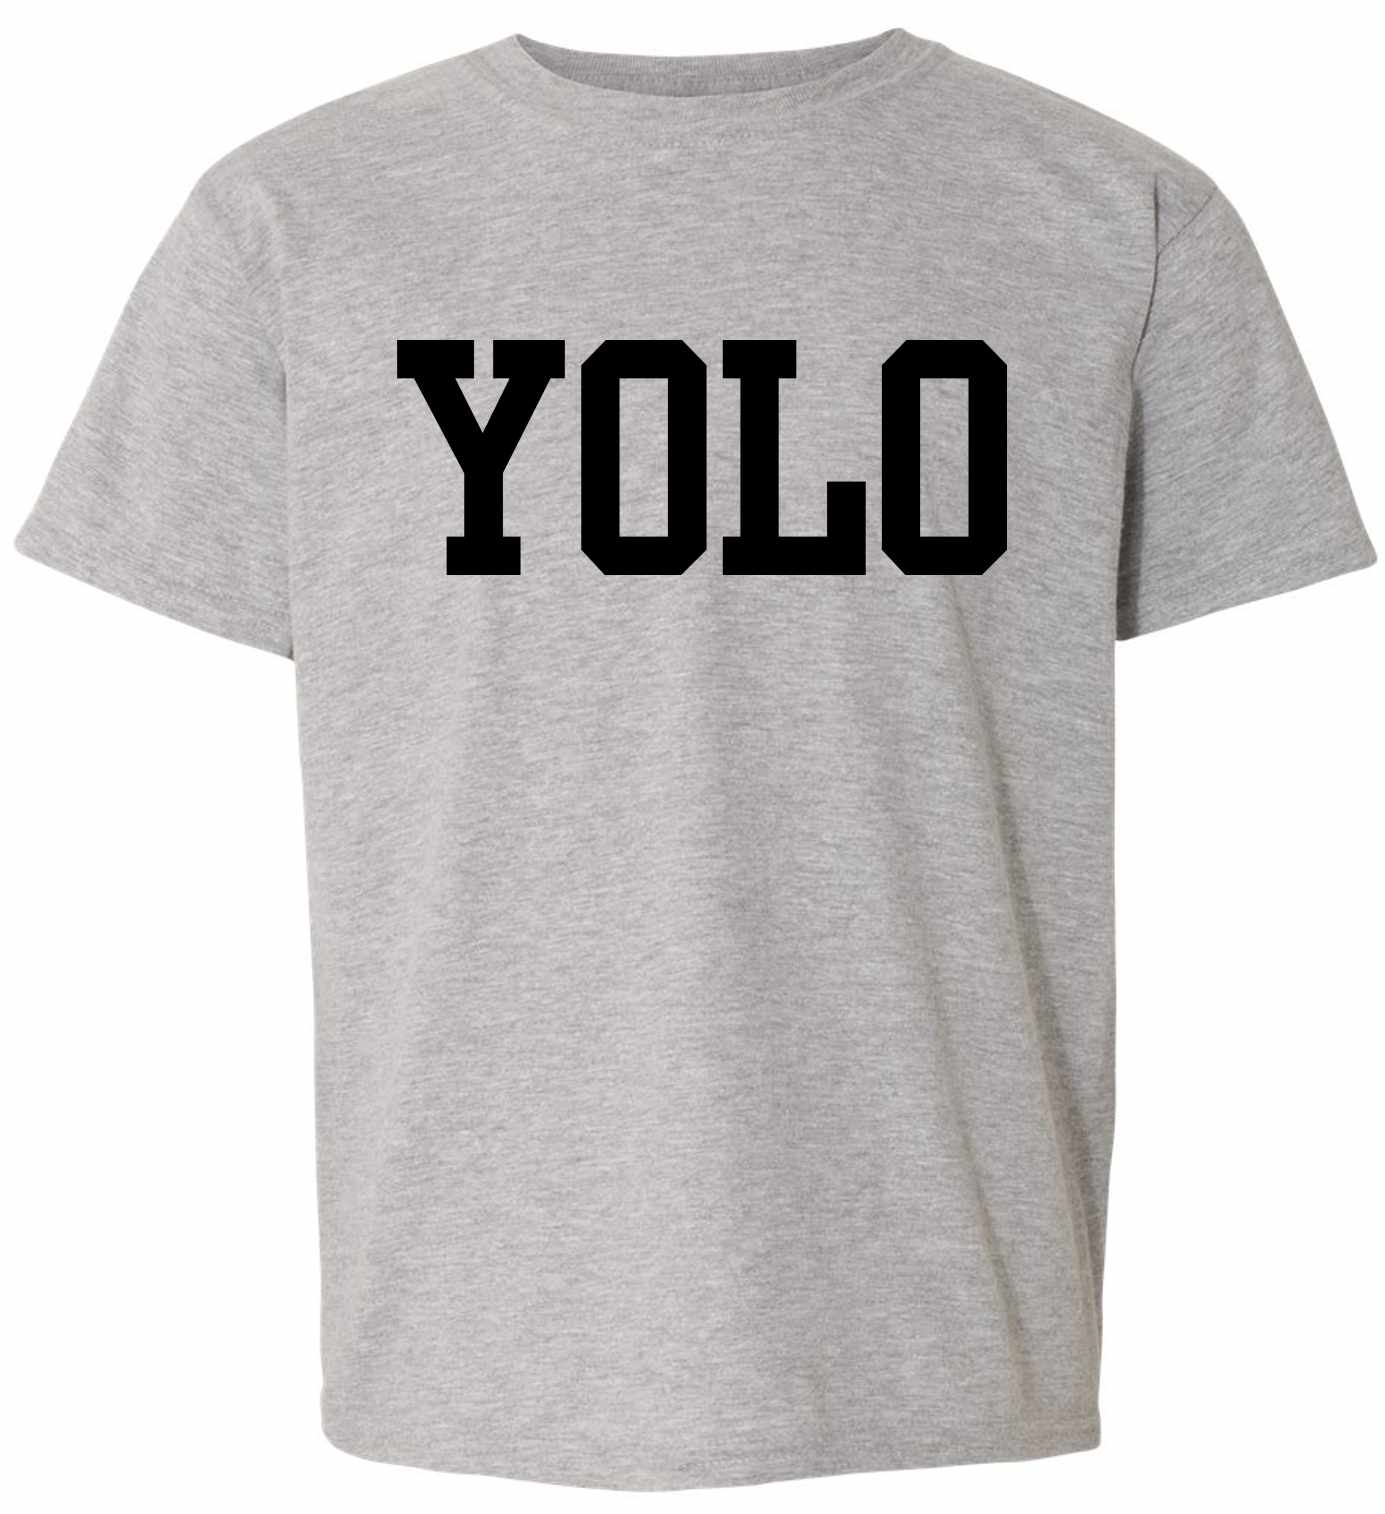 YOLO on Kids T-Shirt (#850-201)